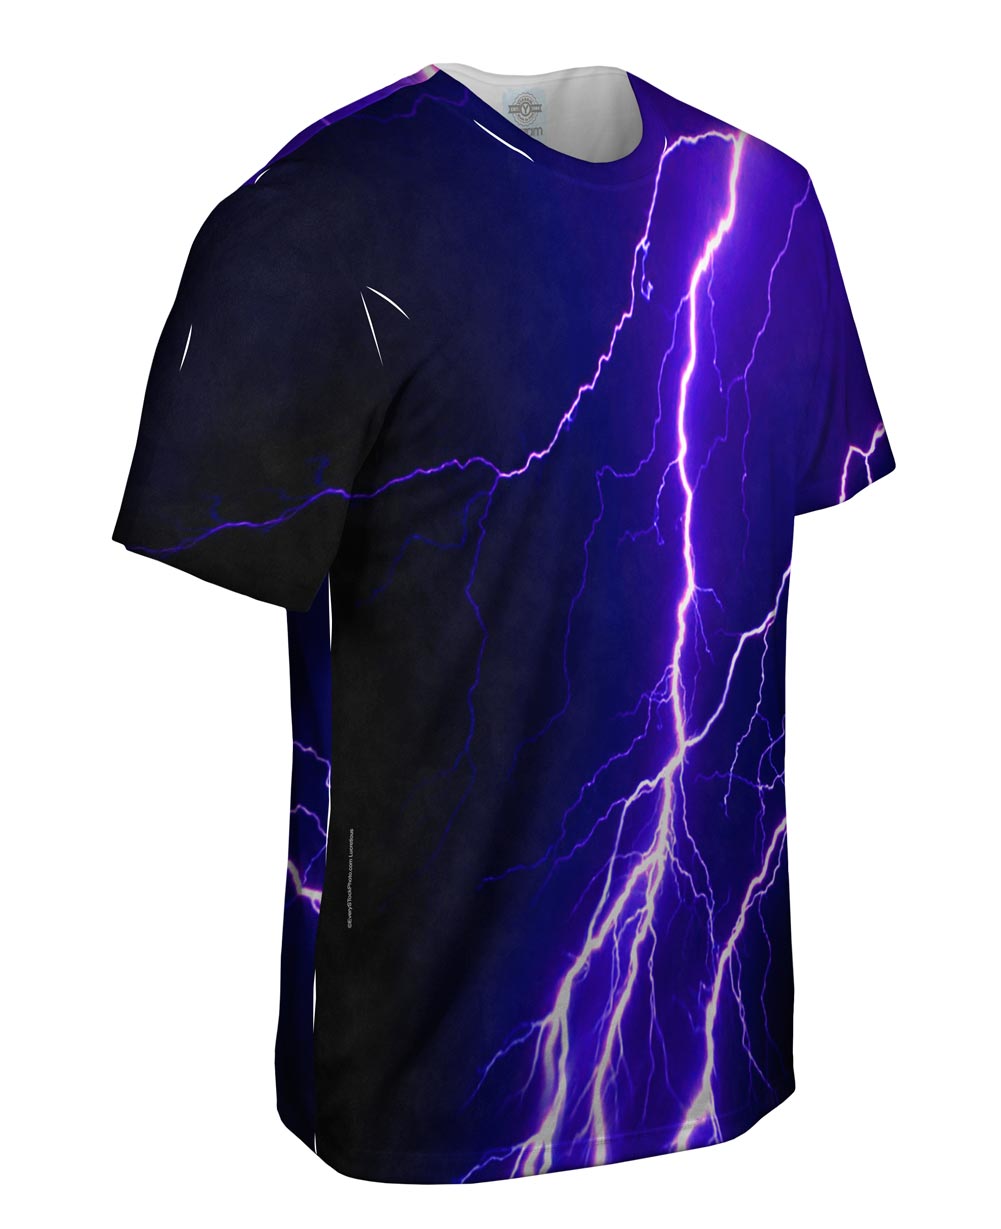 Yizzam- Violet Lightning Storm - New Men Unisex Tee Shirt XS S M L XL ...